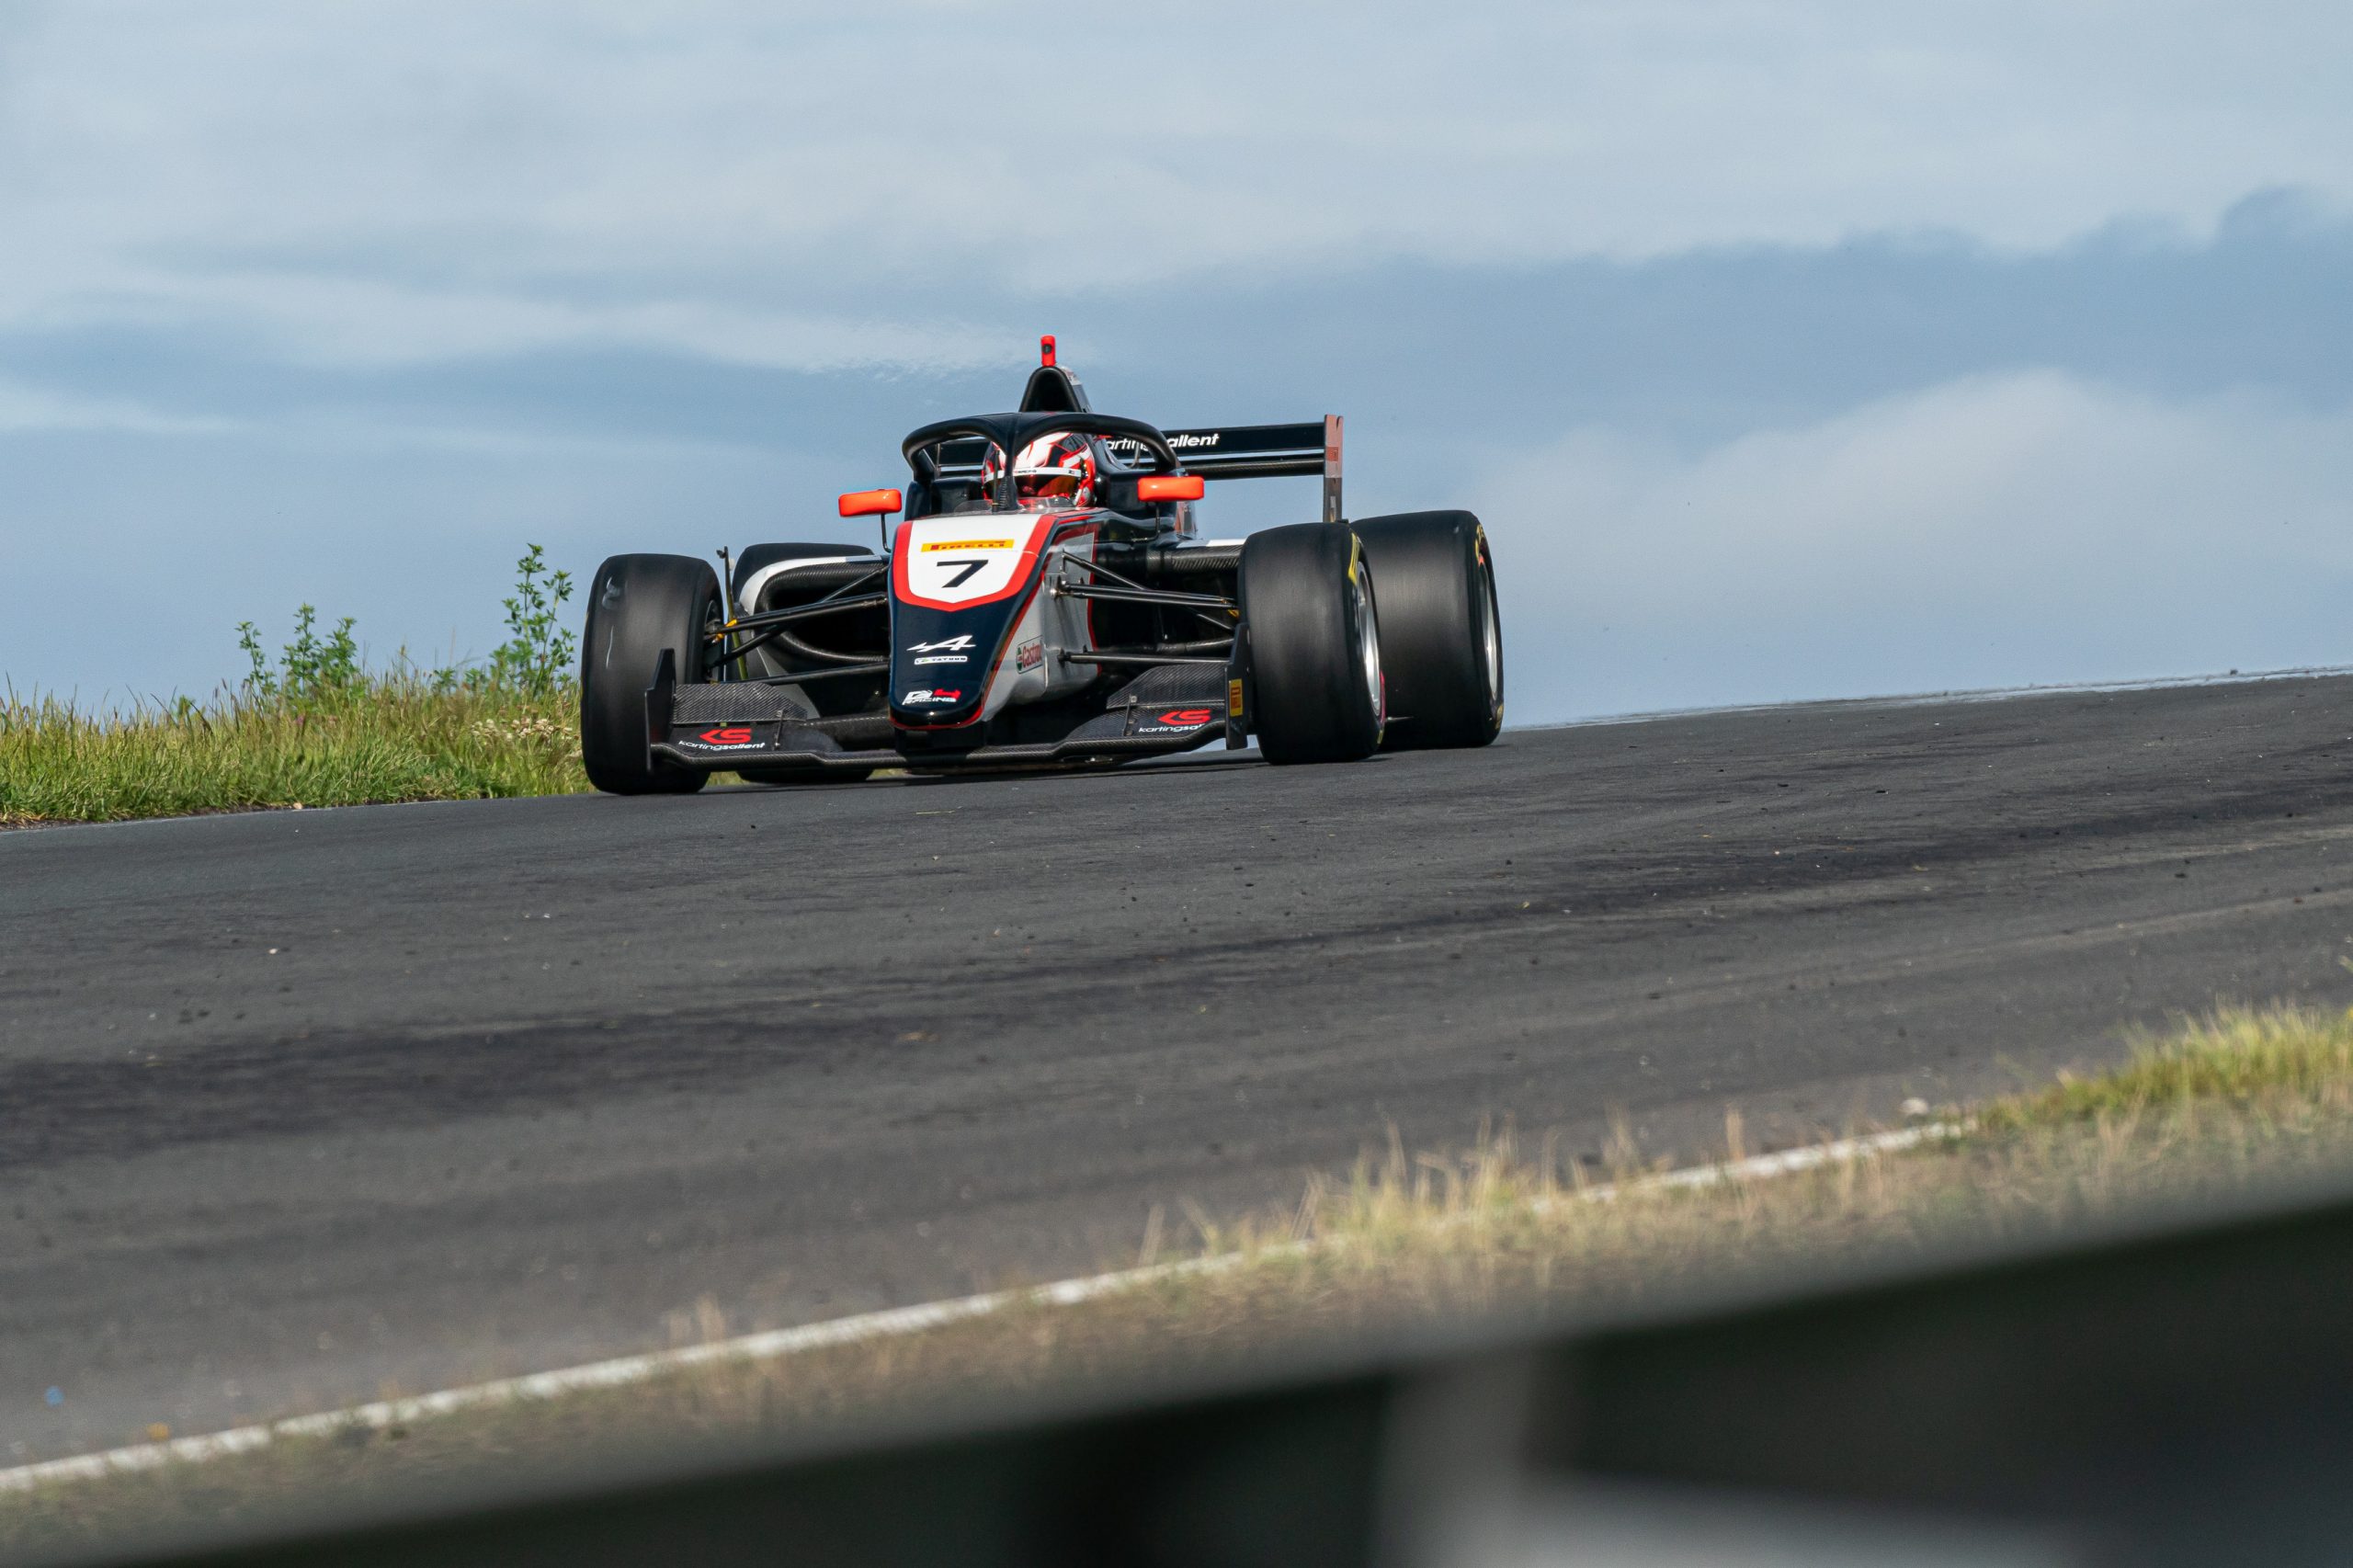 G4 Racing takes brilliant P4 in Zandvoort qualifying